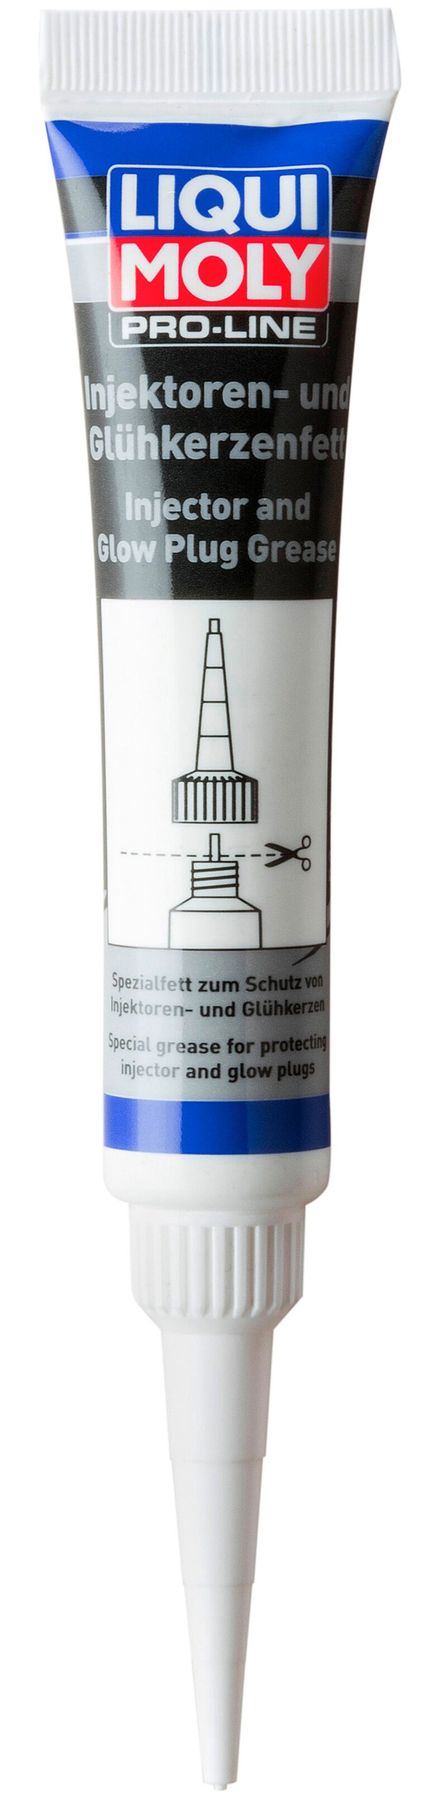 Liqui Moly Pro-Line Injektoren- und Gluhkerzenfett - для монтажа форсунок и  свечей накала - LIQUI MOLY, Официальный интернет-магазин